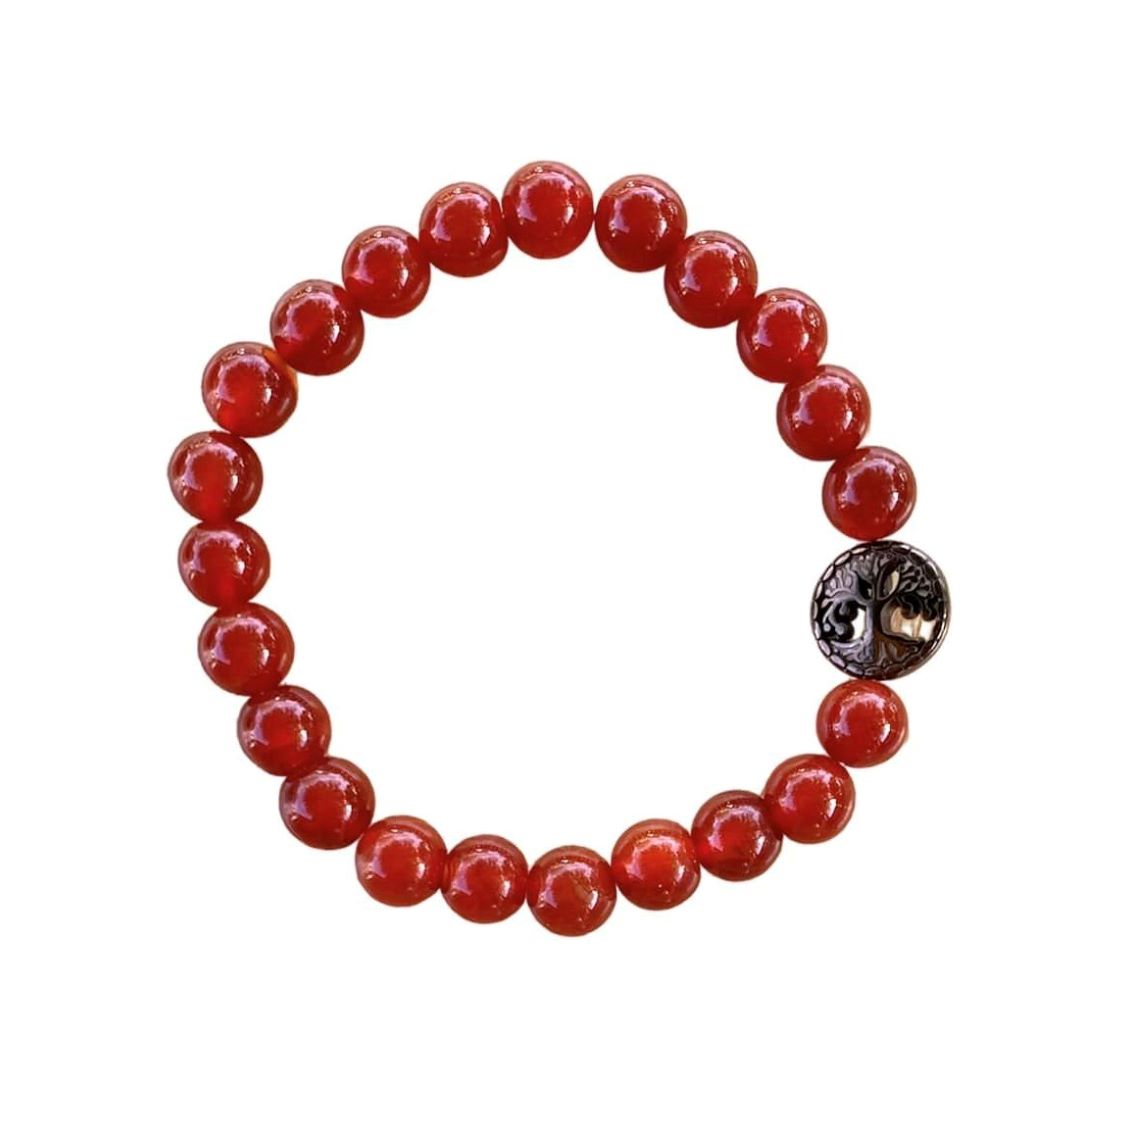 Healing Crystal Bracelets Red Carnelian 8mm Round Beads